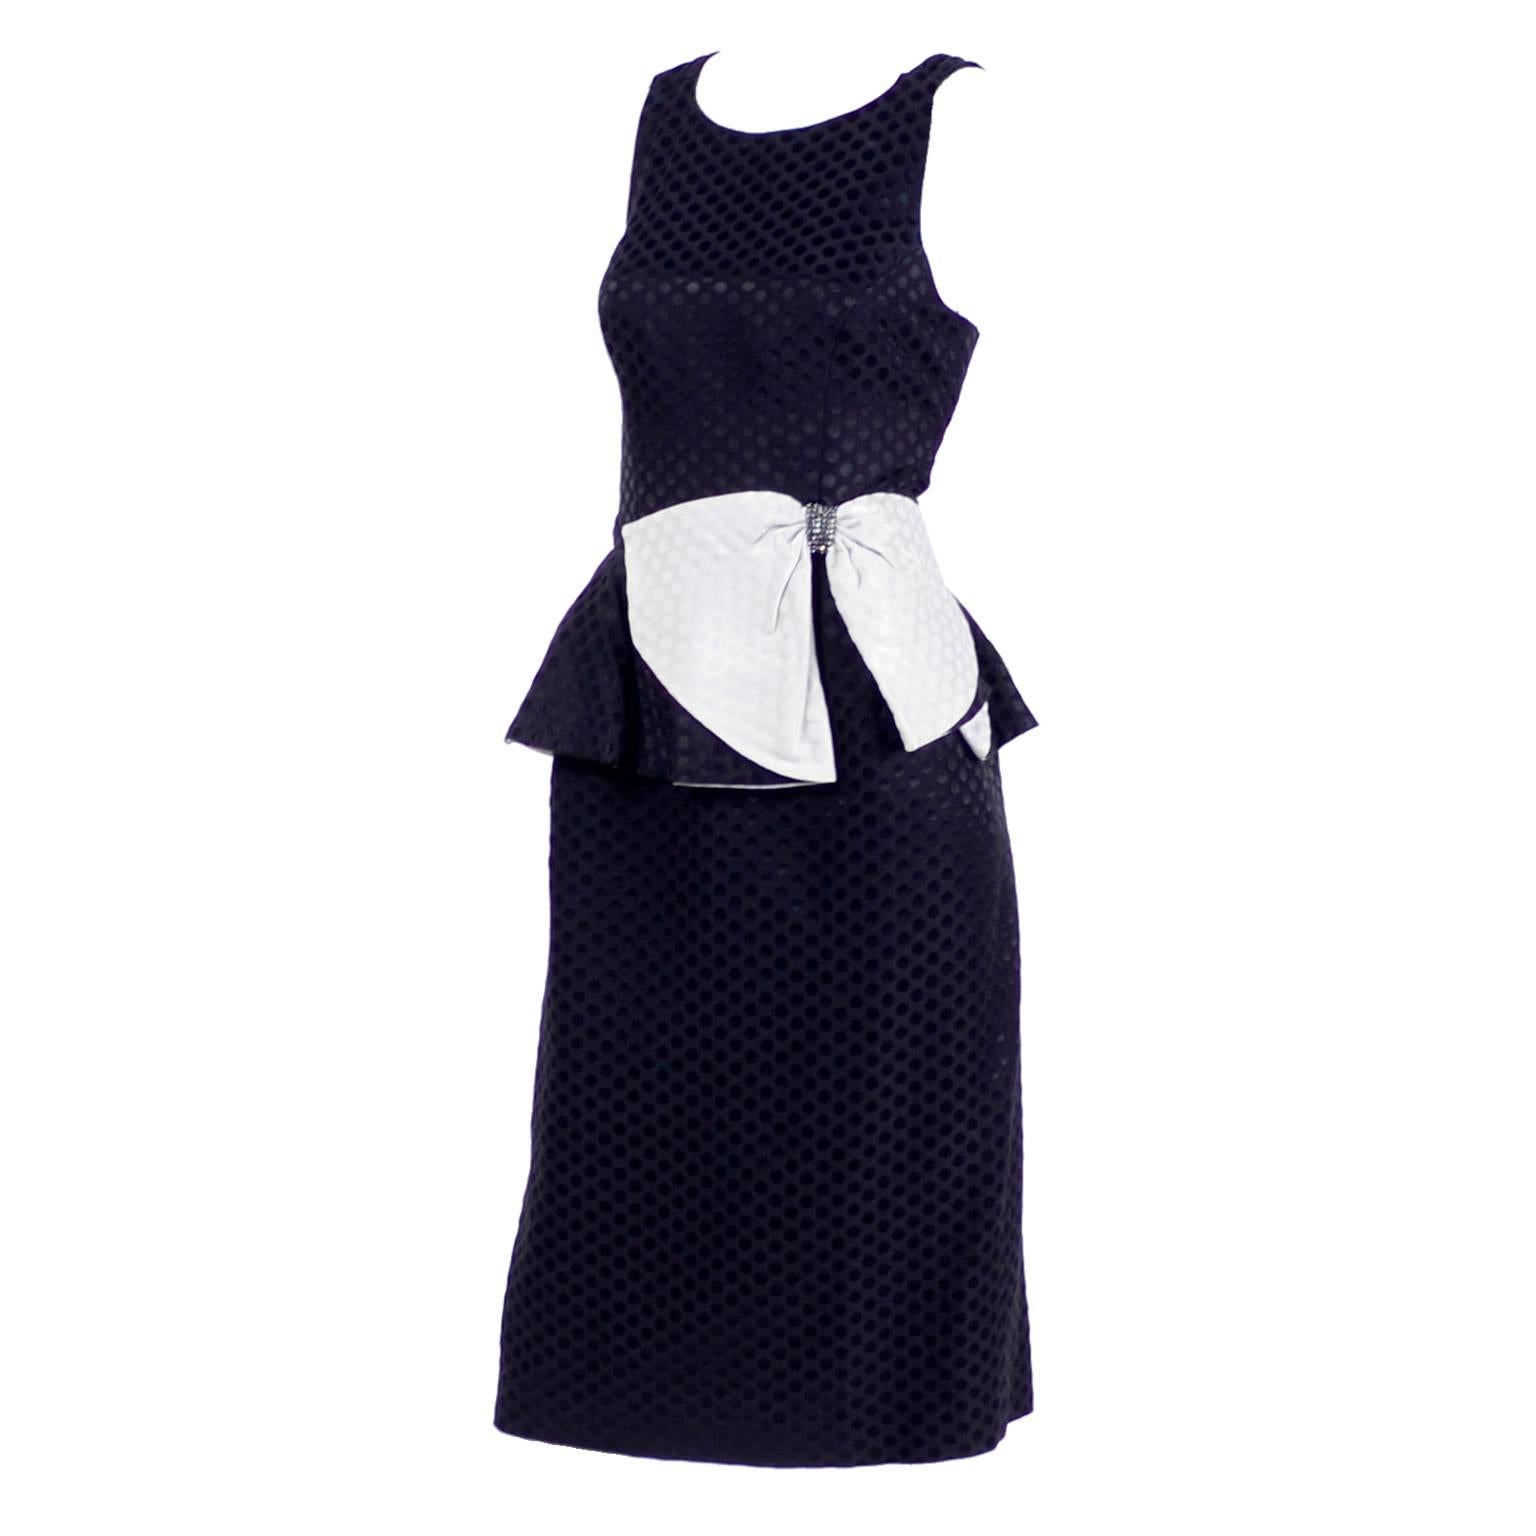 Black / White Polka Dot Dress With Rhinestone Embellished Bow and Peplum, 1980s 